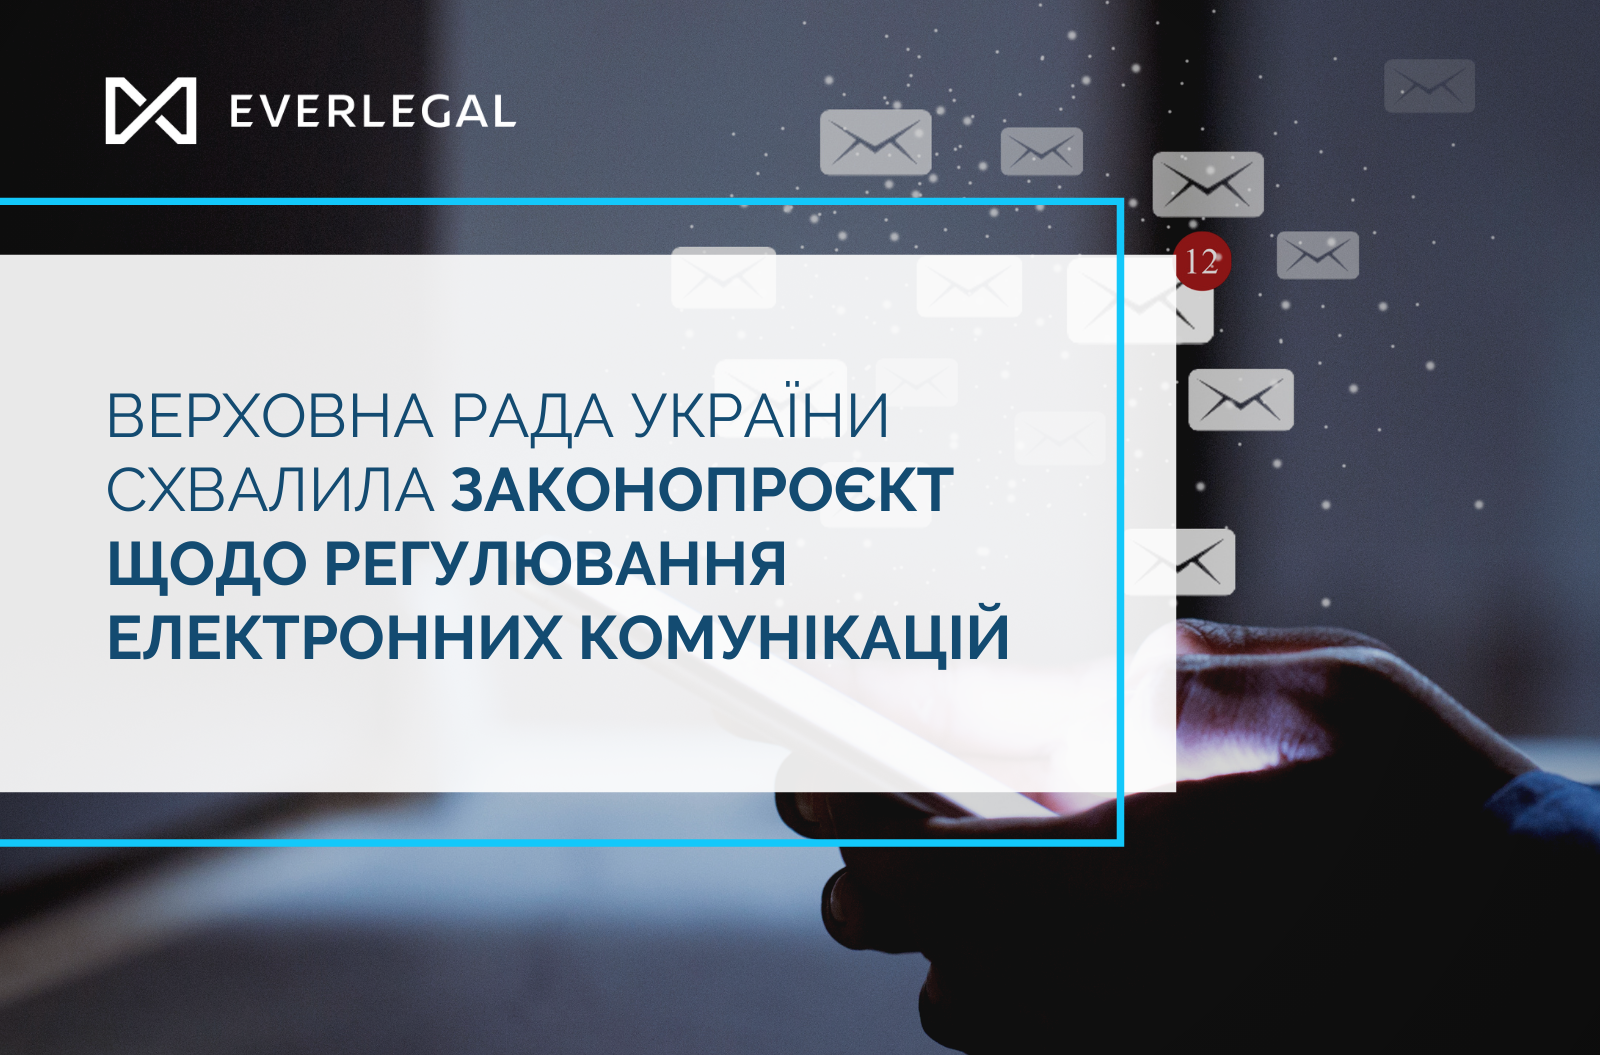 Verkhovna Rada of Ukraine approved bill on the regulation of electronic communications